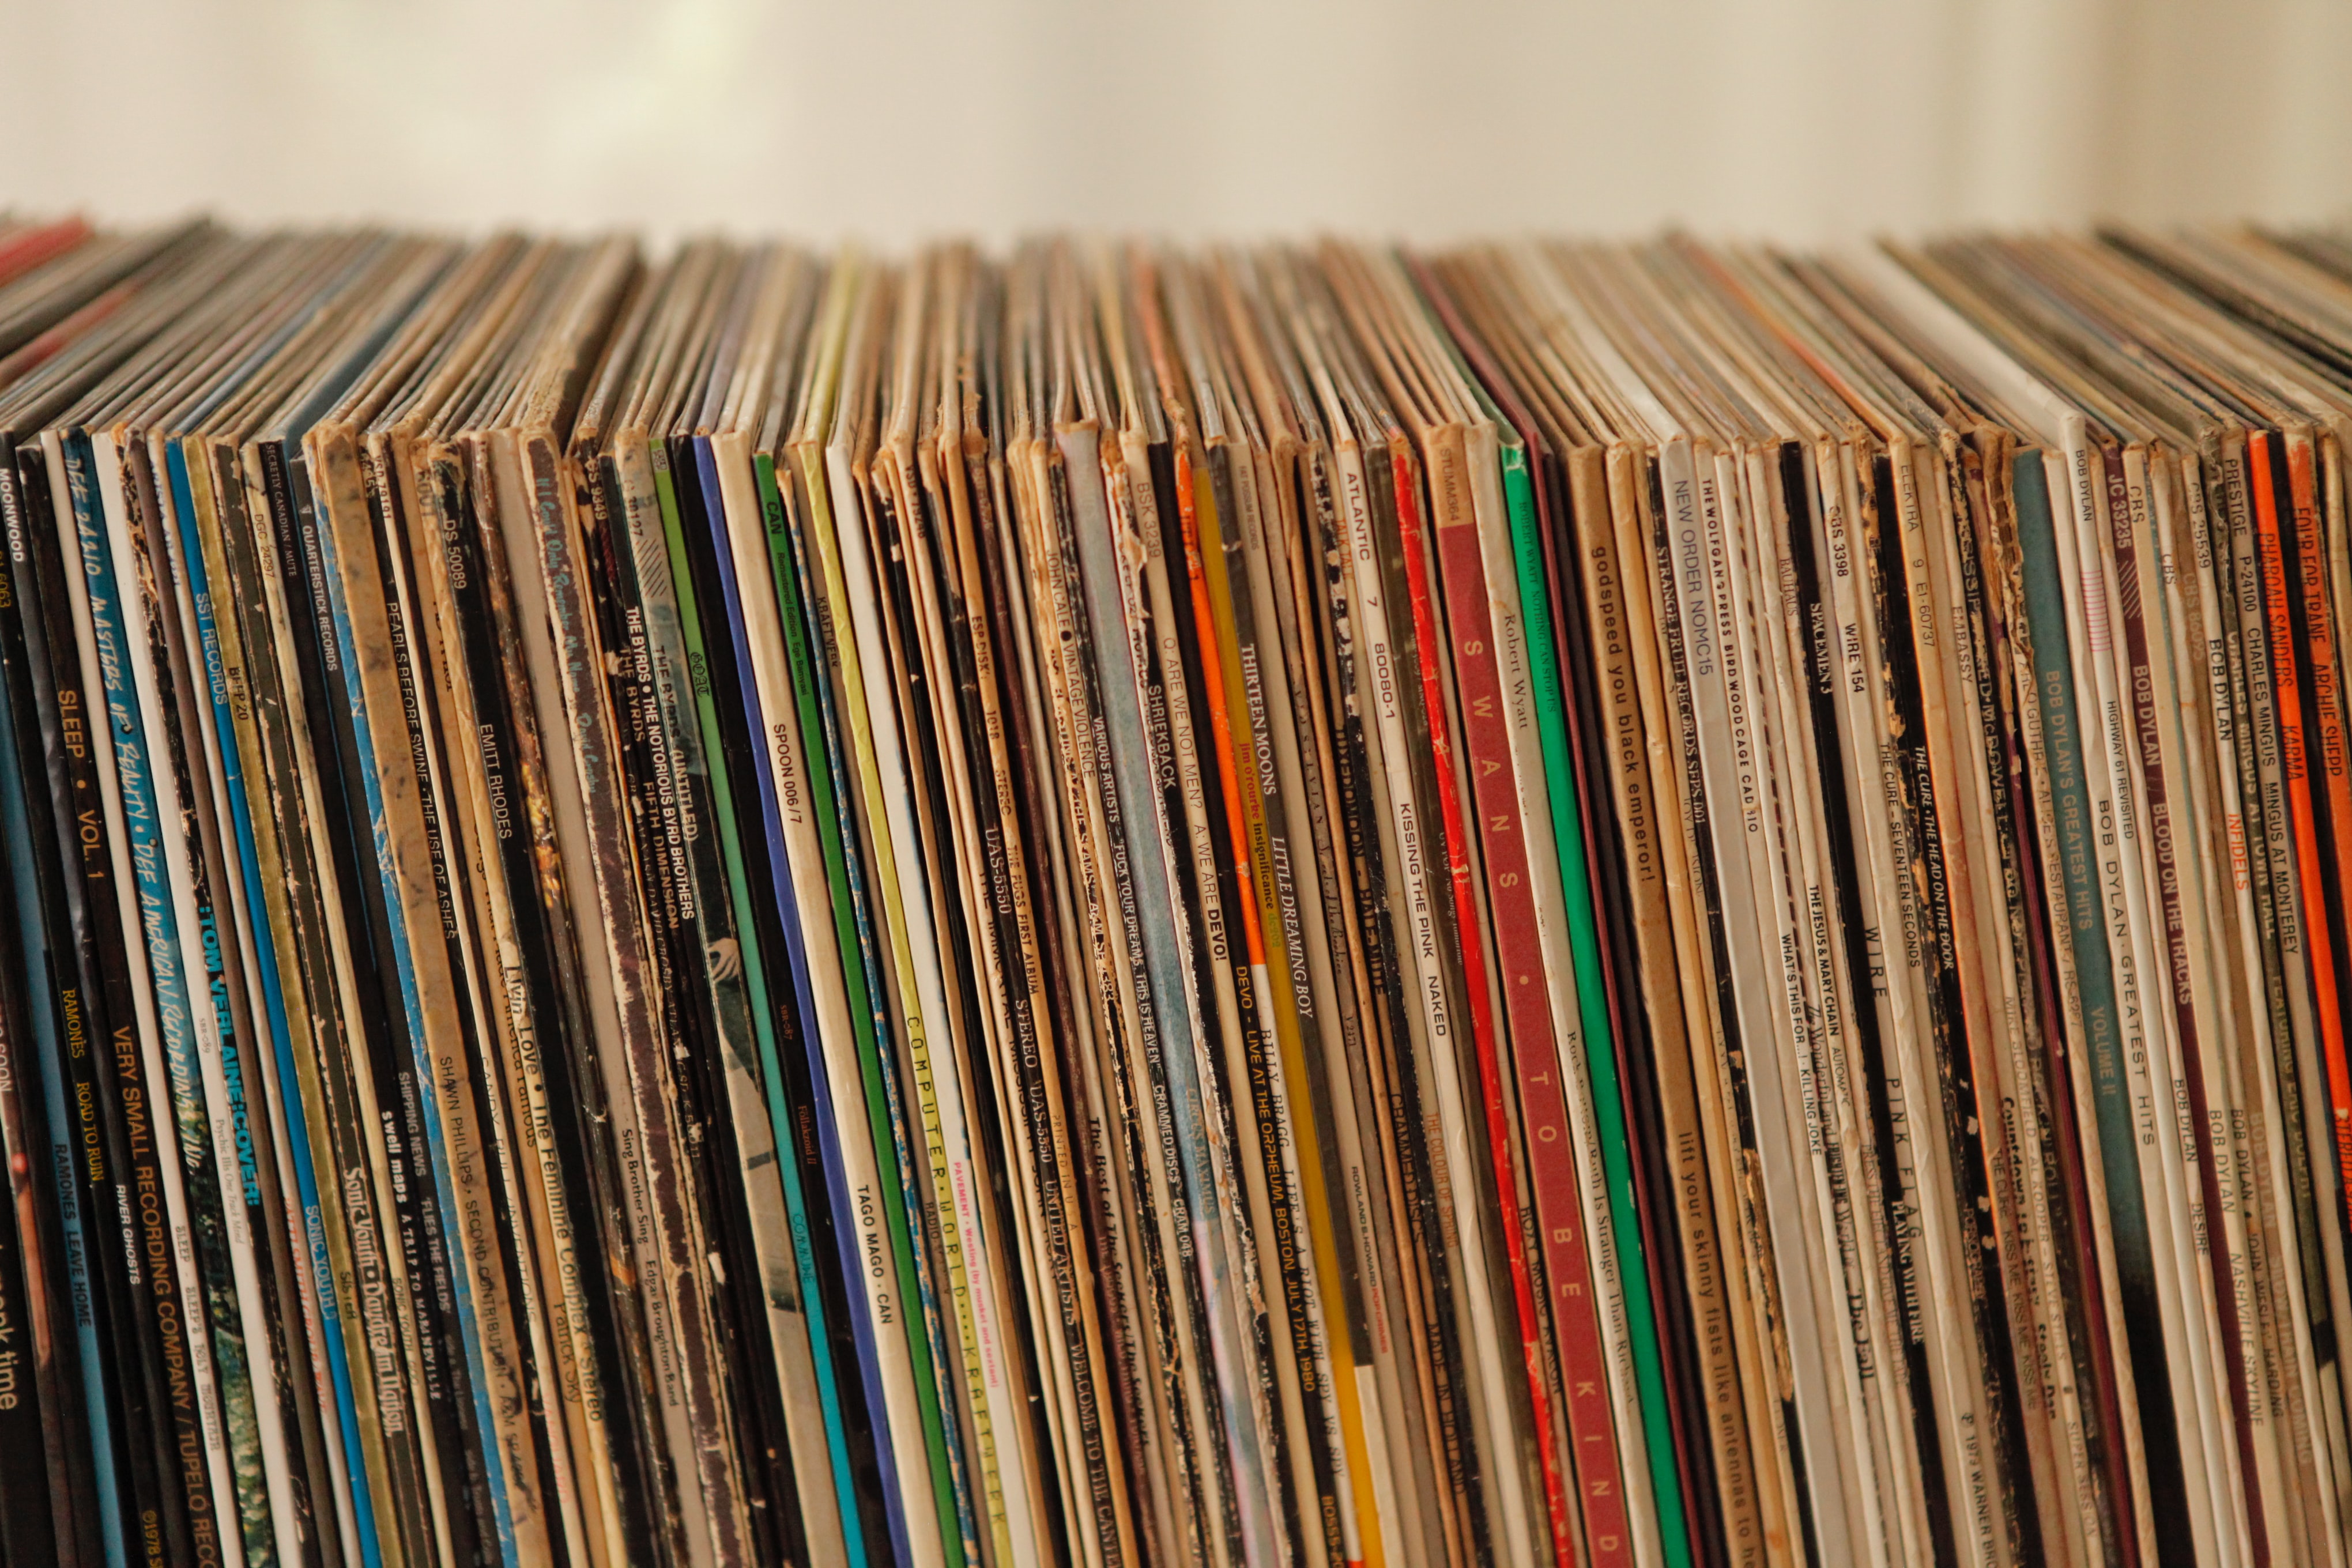 Vinyl collection